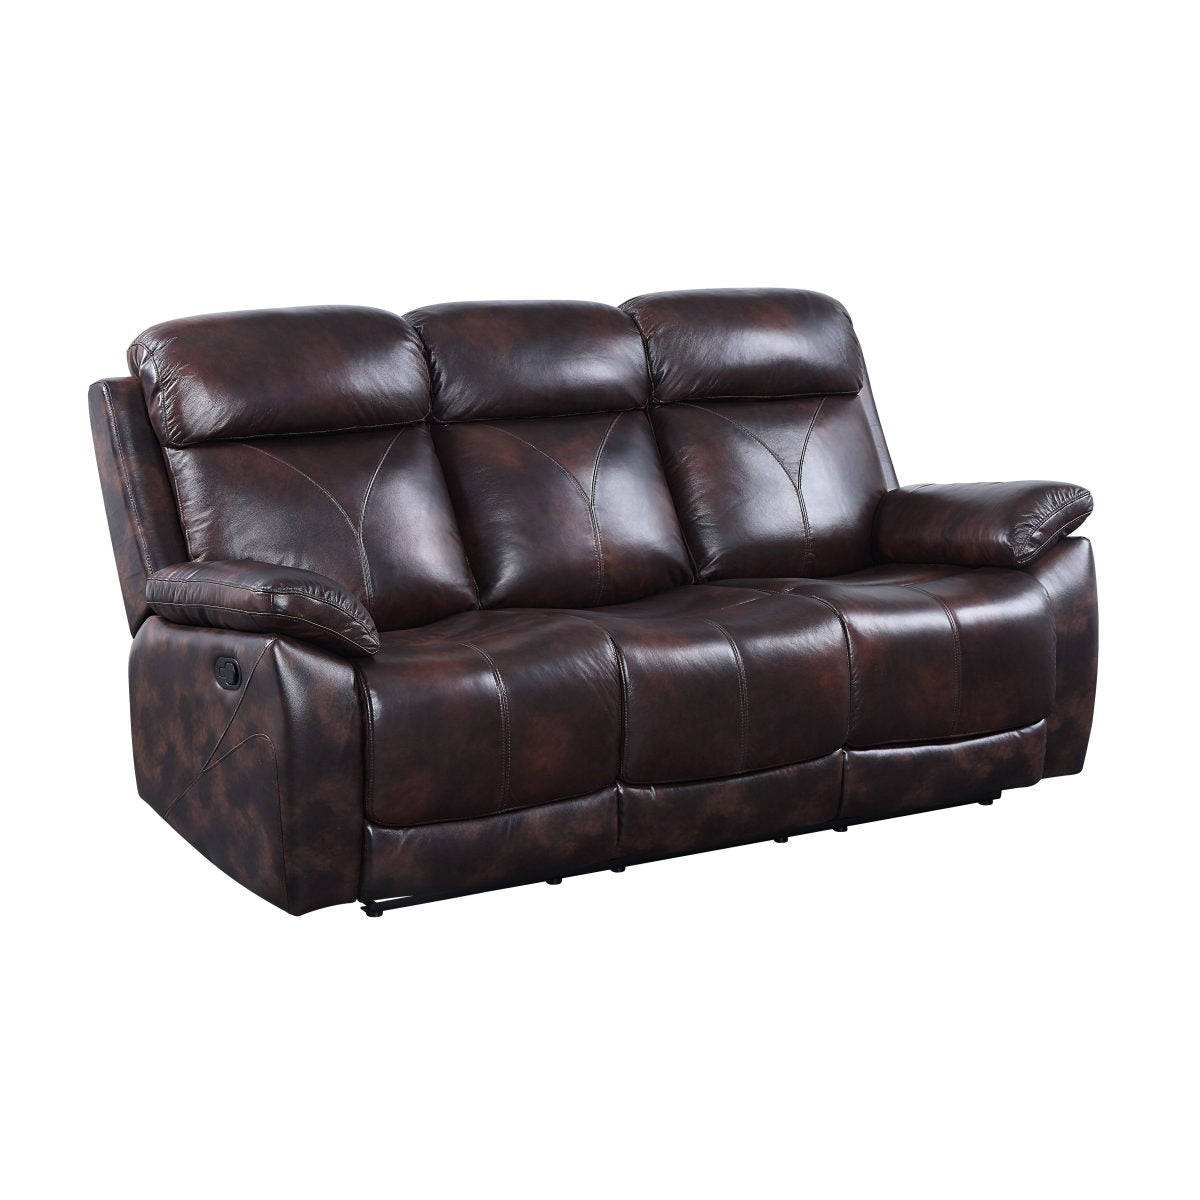 Perfiel - Sofa - 2 Tone Dark Brown Top Grain Leather